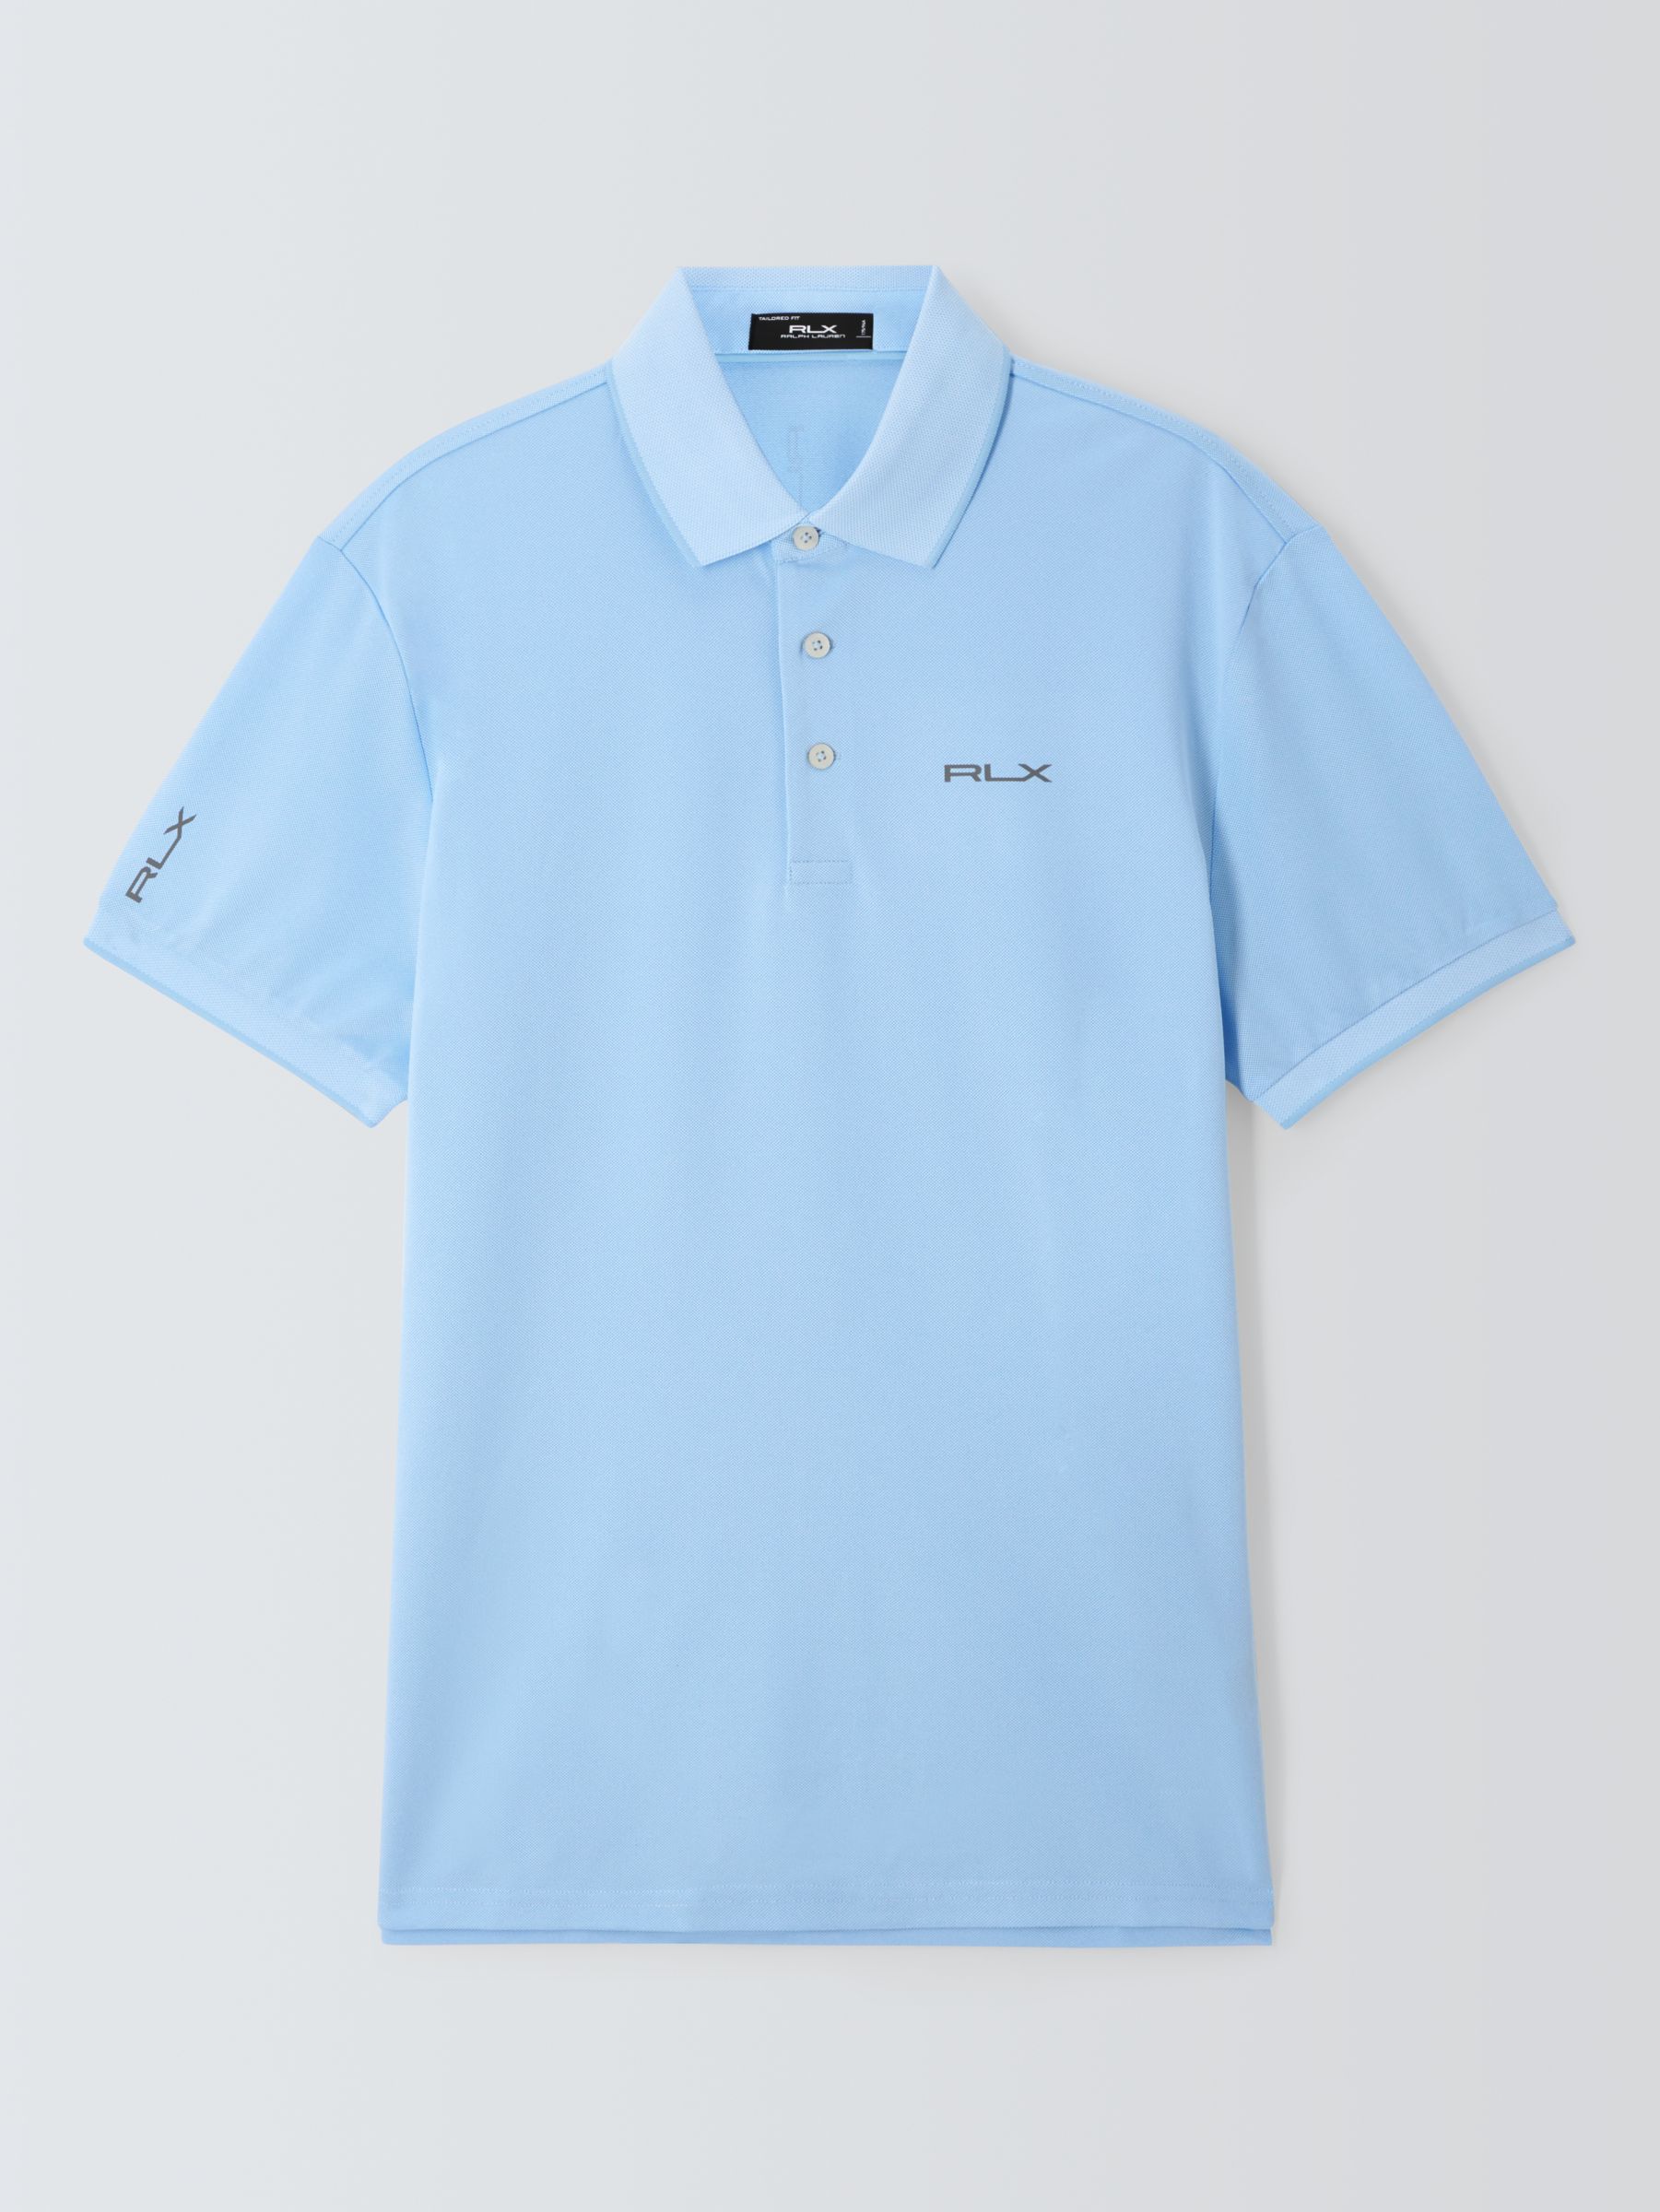 Ralph Lauren Tailored Fit Performance Polo Shirt, Office Blue, S